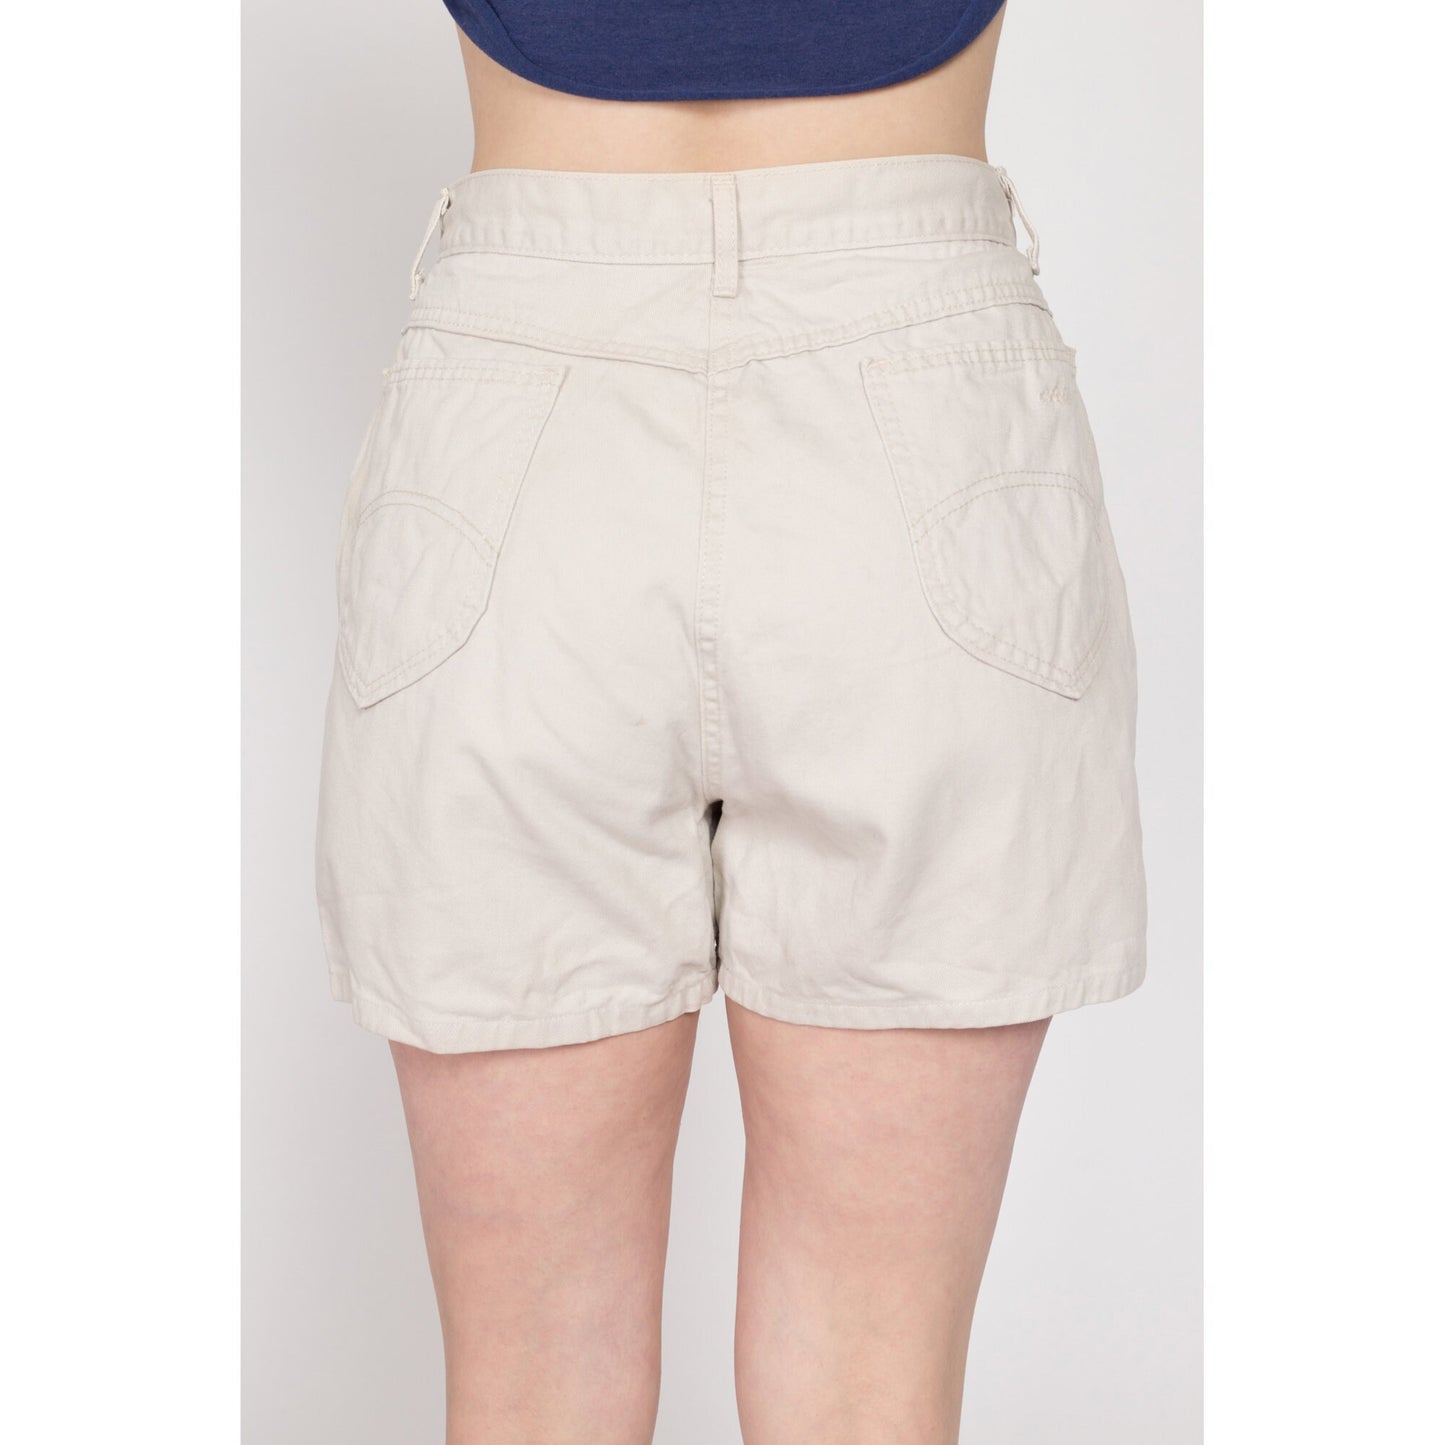 Medium 90s Khaki High Waisted Shorts 29" | Vintage Chic Brand Casual Cotton Shorts